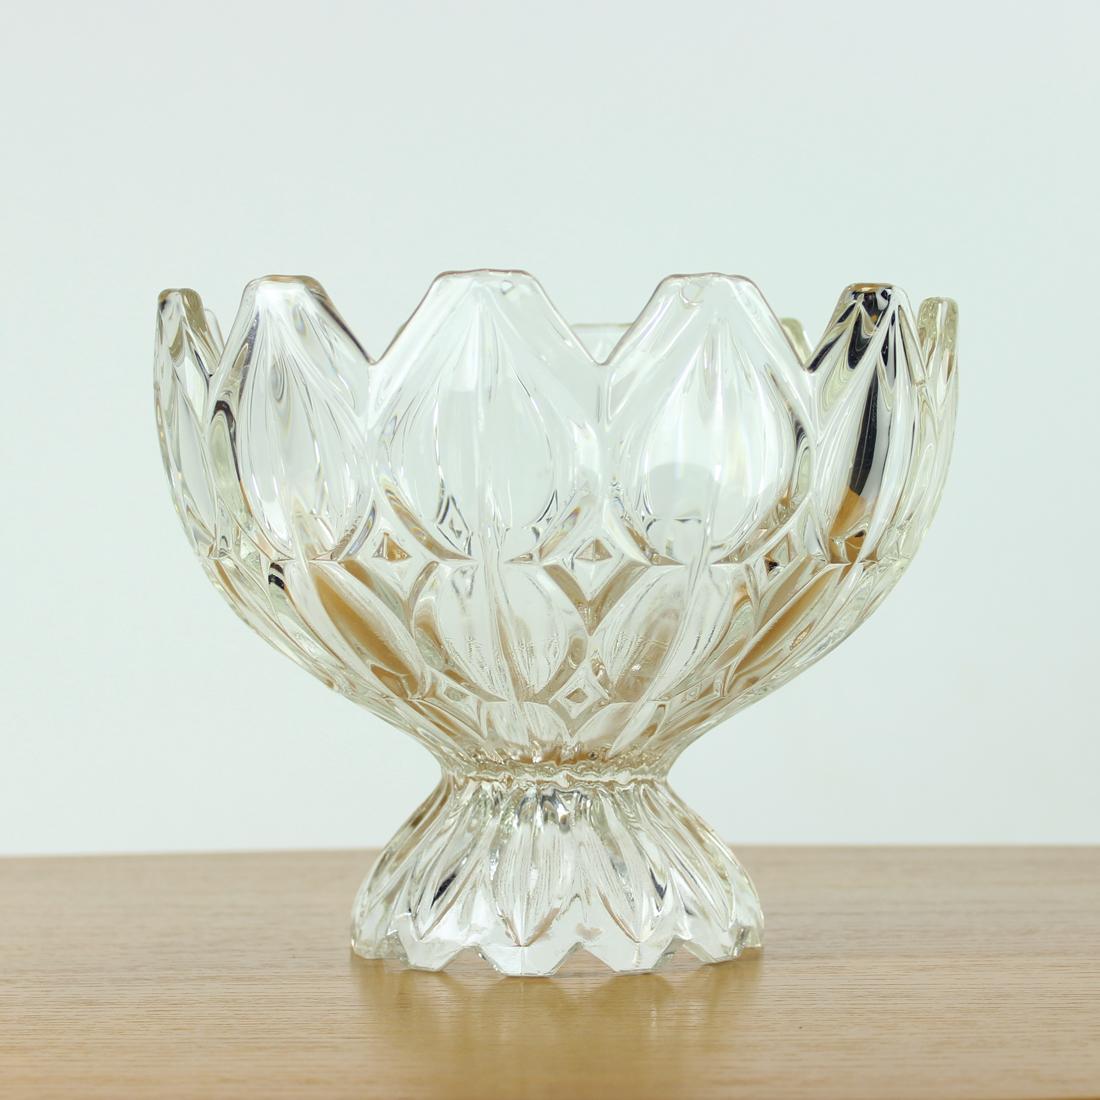 Unique Pressed Glass Bowl, Tulip Collection Hermanowa Hut, 1957 For Sale 2